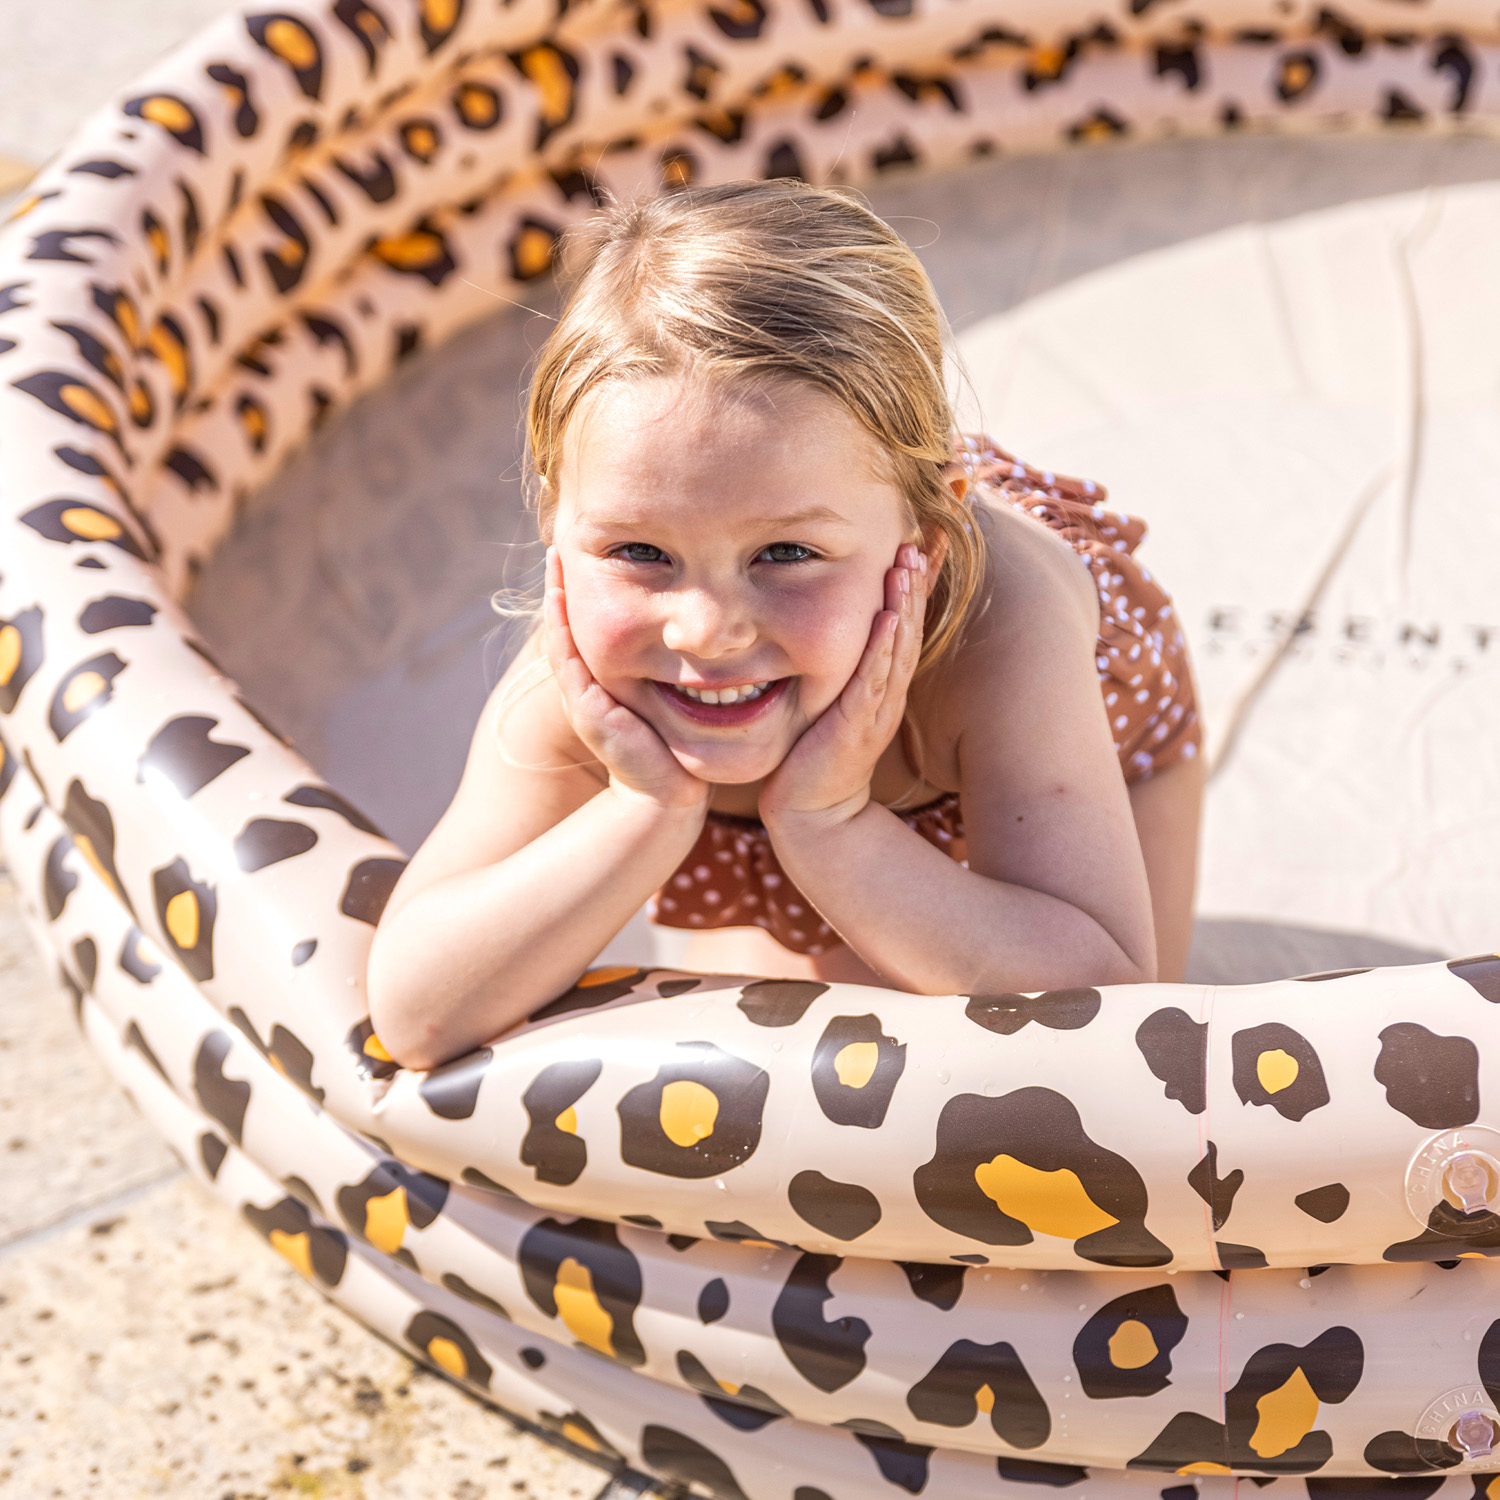 Swim Essentials | Baby Pool 150cm | Beige Leopard